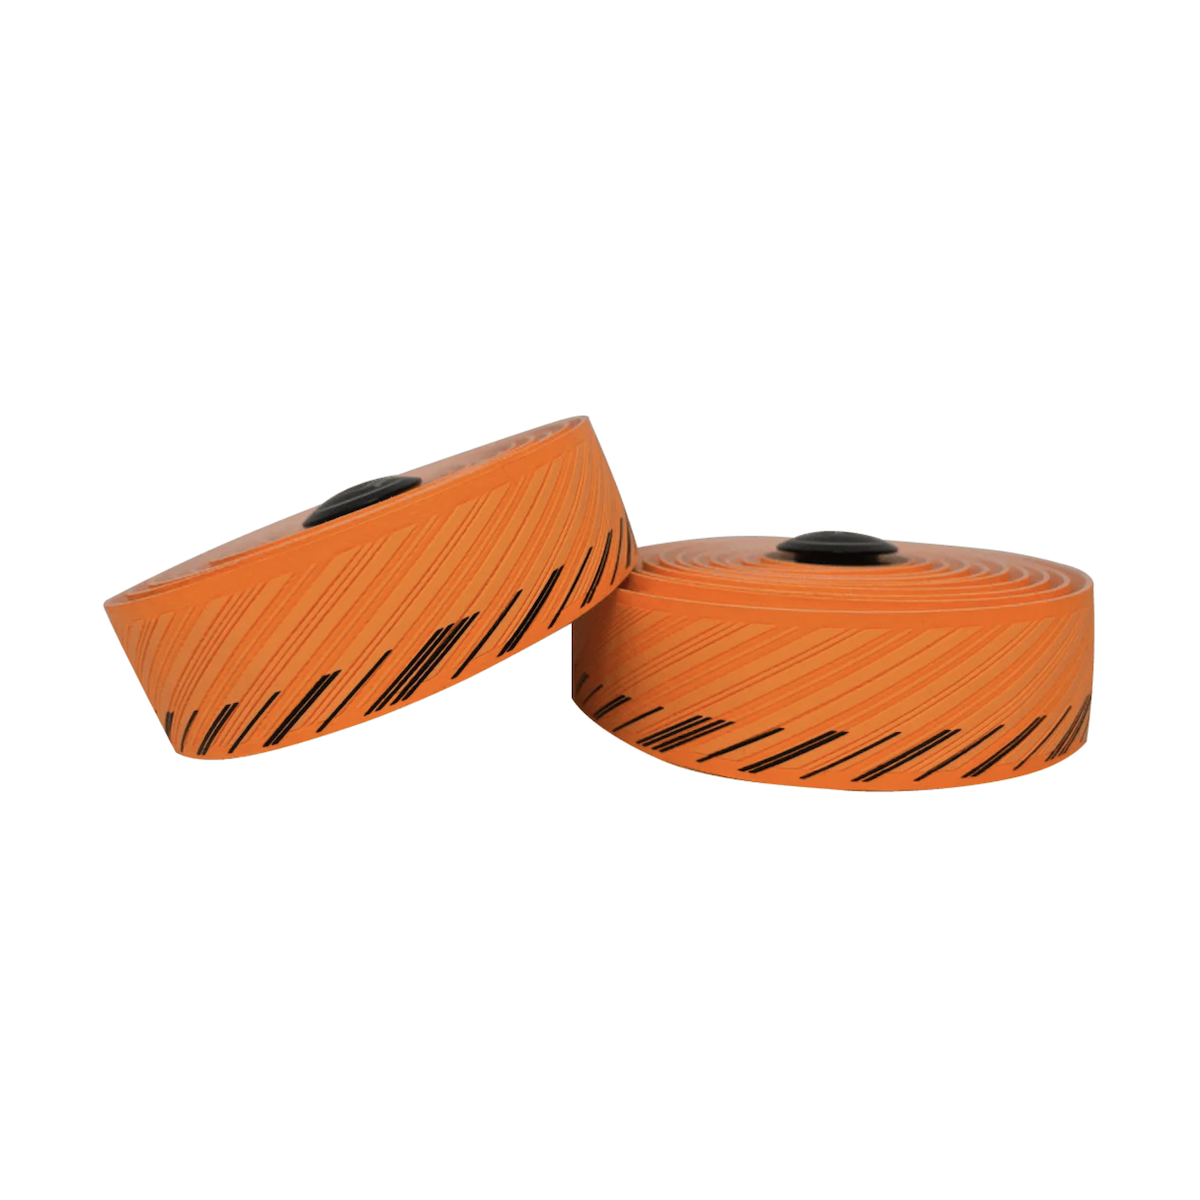 SILCA NASTRO CUSCINO 3.75 mm handlebar tape - neon orange / black